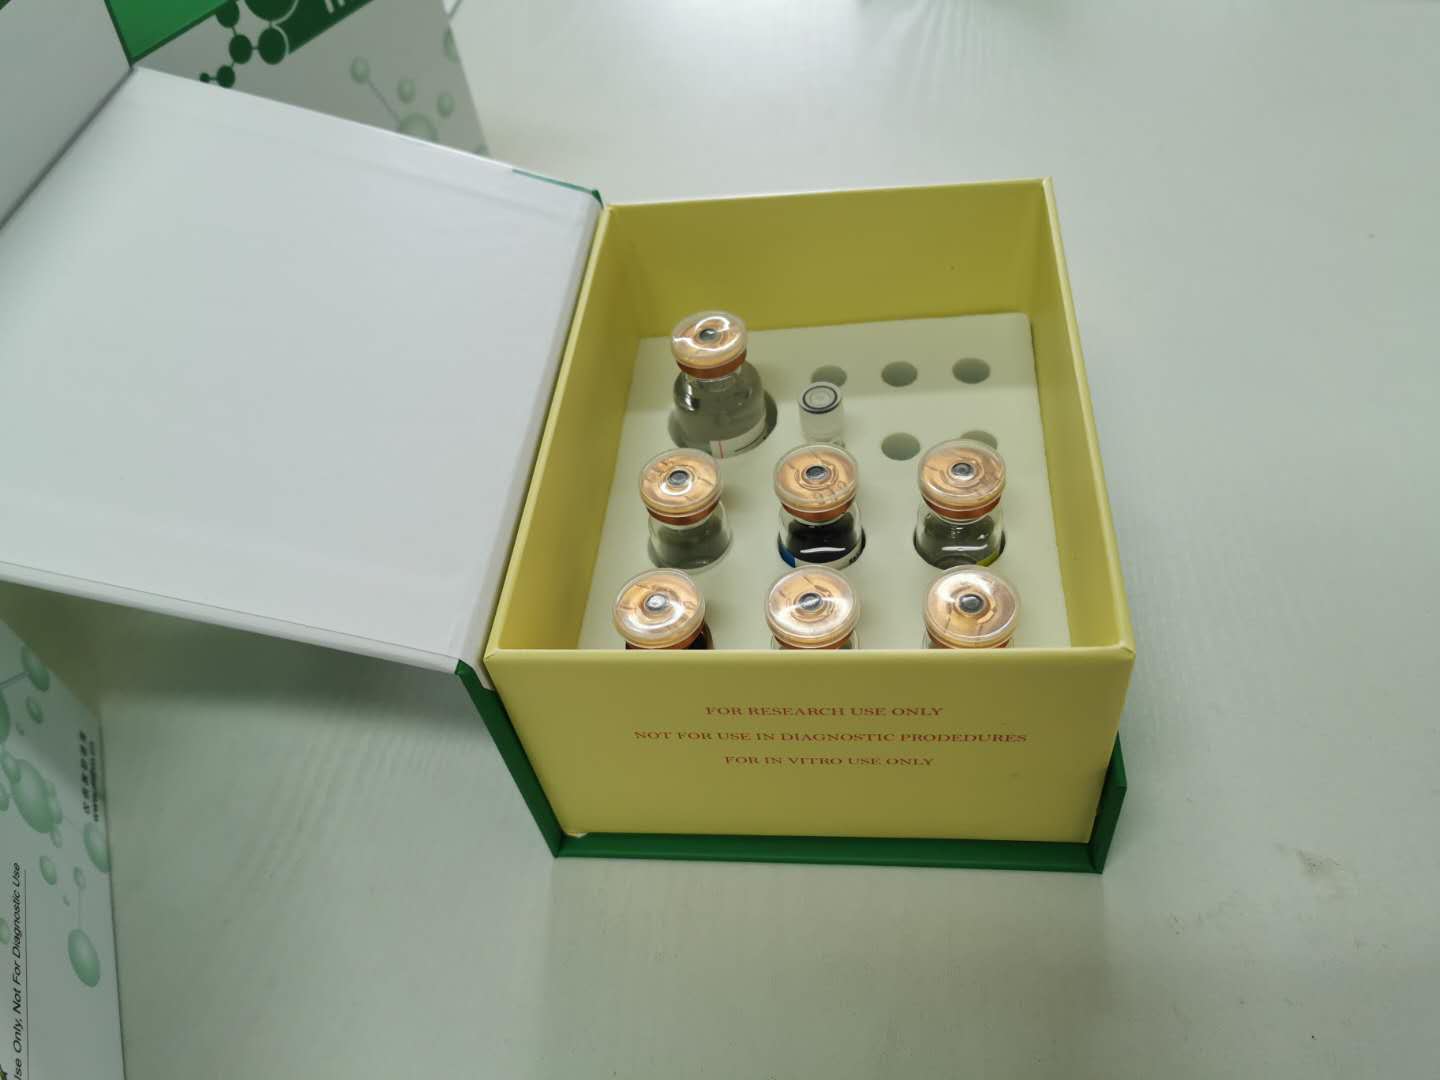 COMP试剂盒产品用途